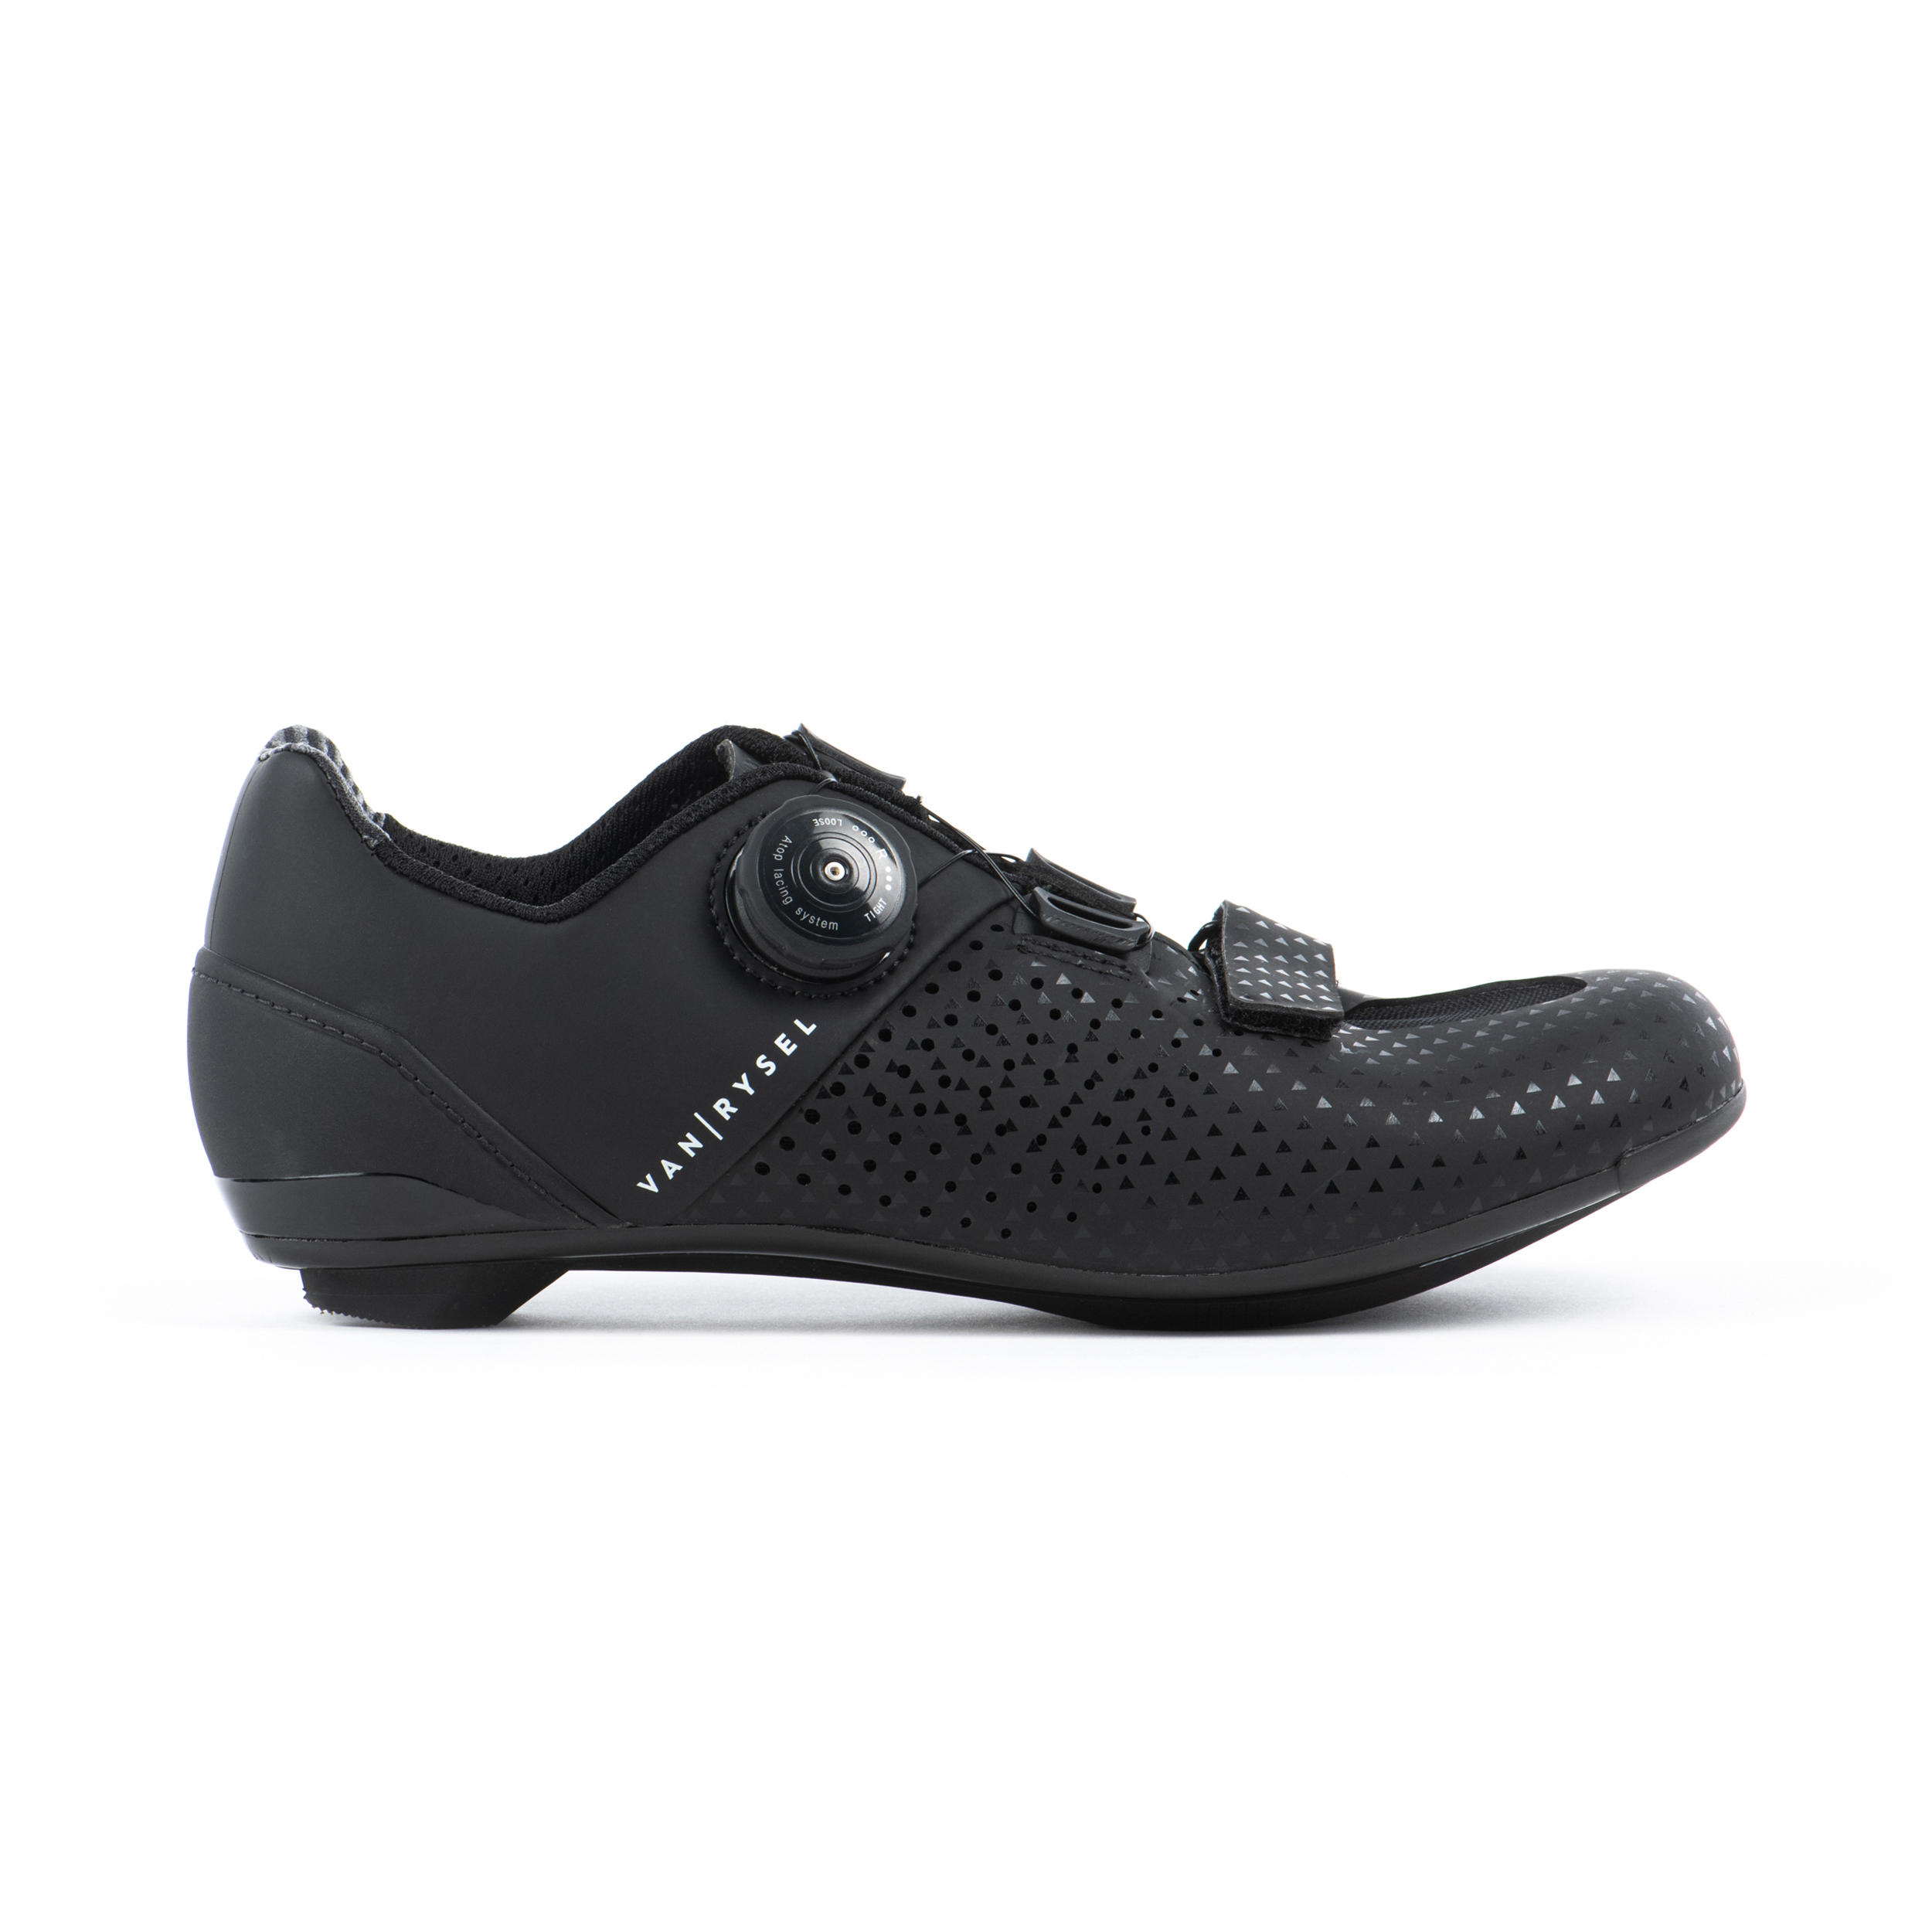 VAN RYSEL RoadR 520 Women's Carbon Road Cycling Shoes - Black